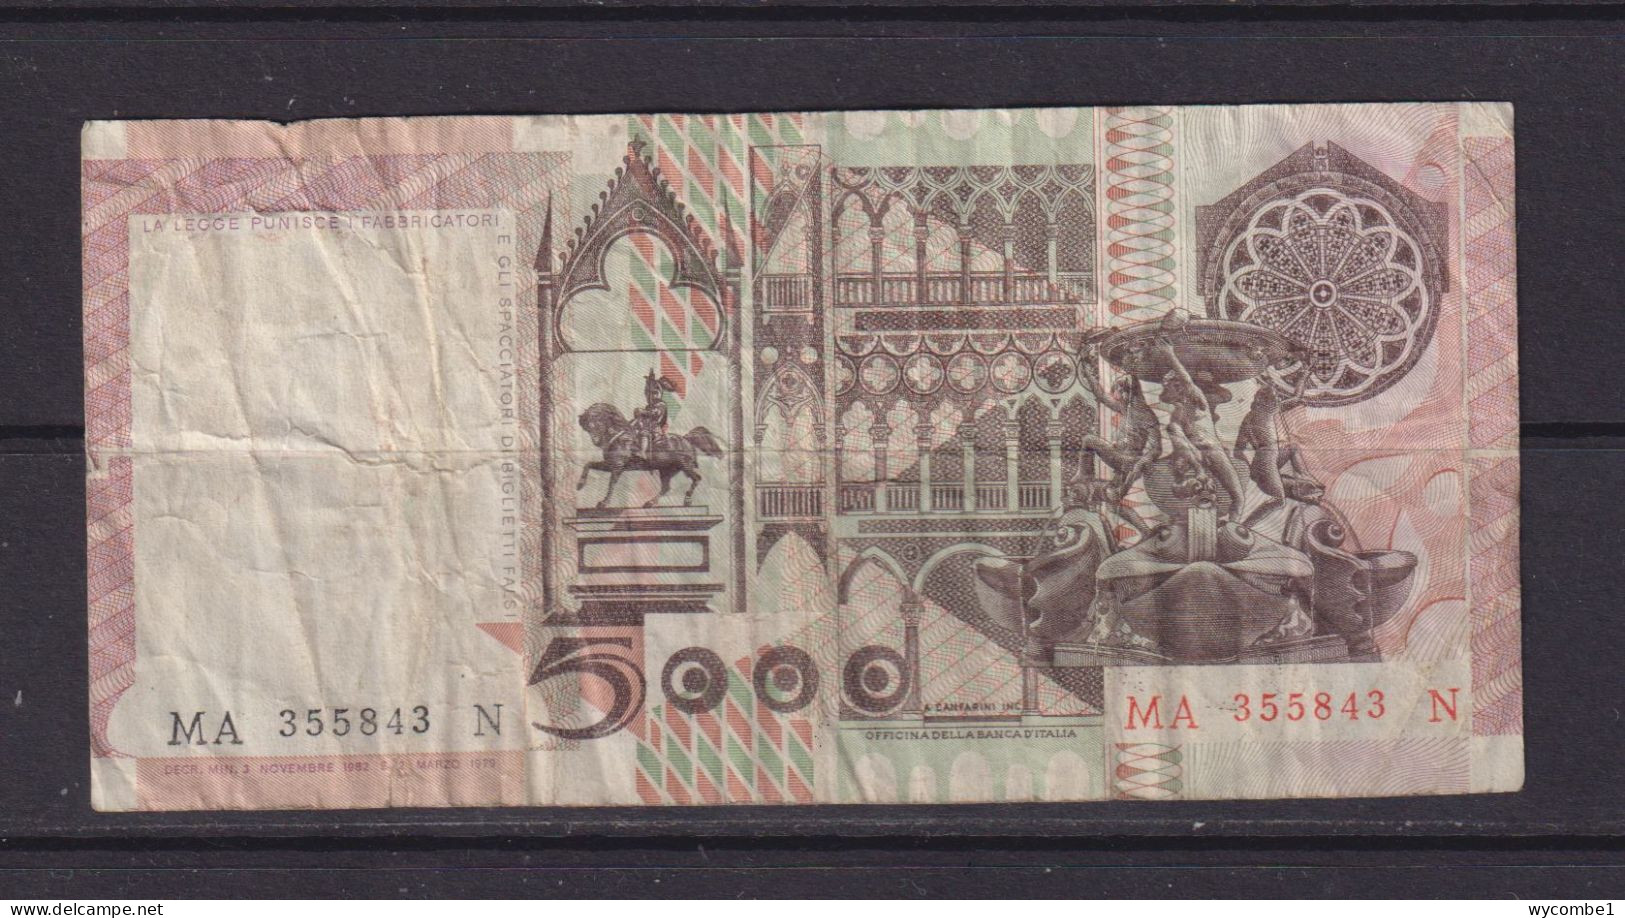 ITALY - 1979 5000 Lira Circulated Banknote - 5000 Lire